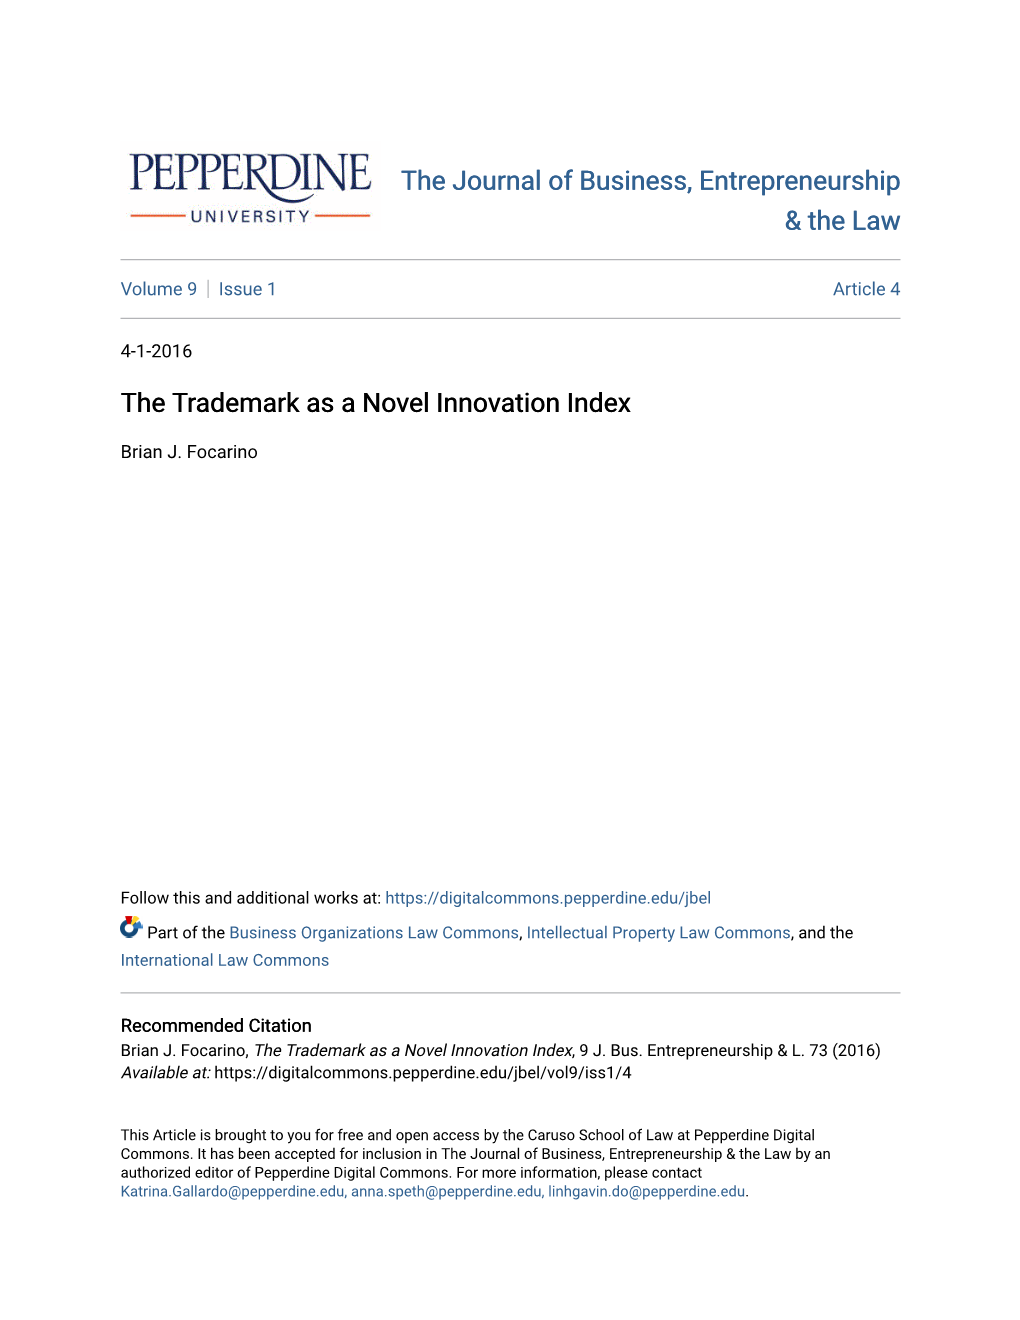 The Trademark As a Novel Innovation Index